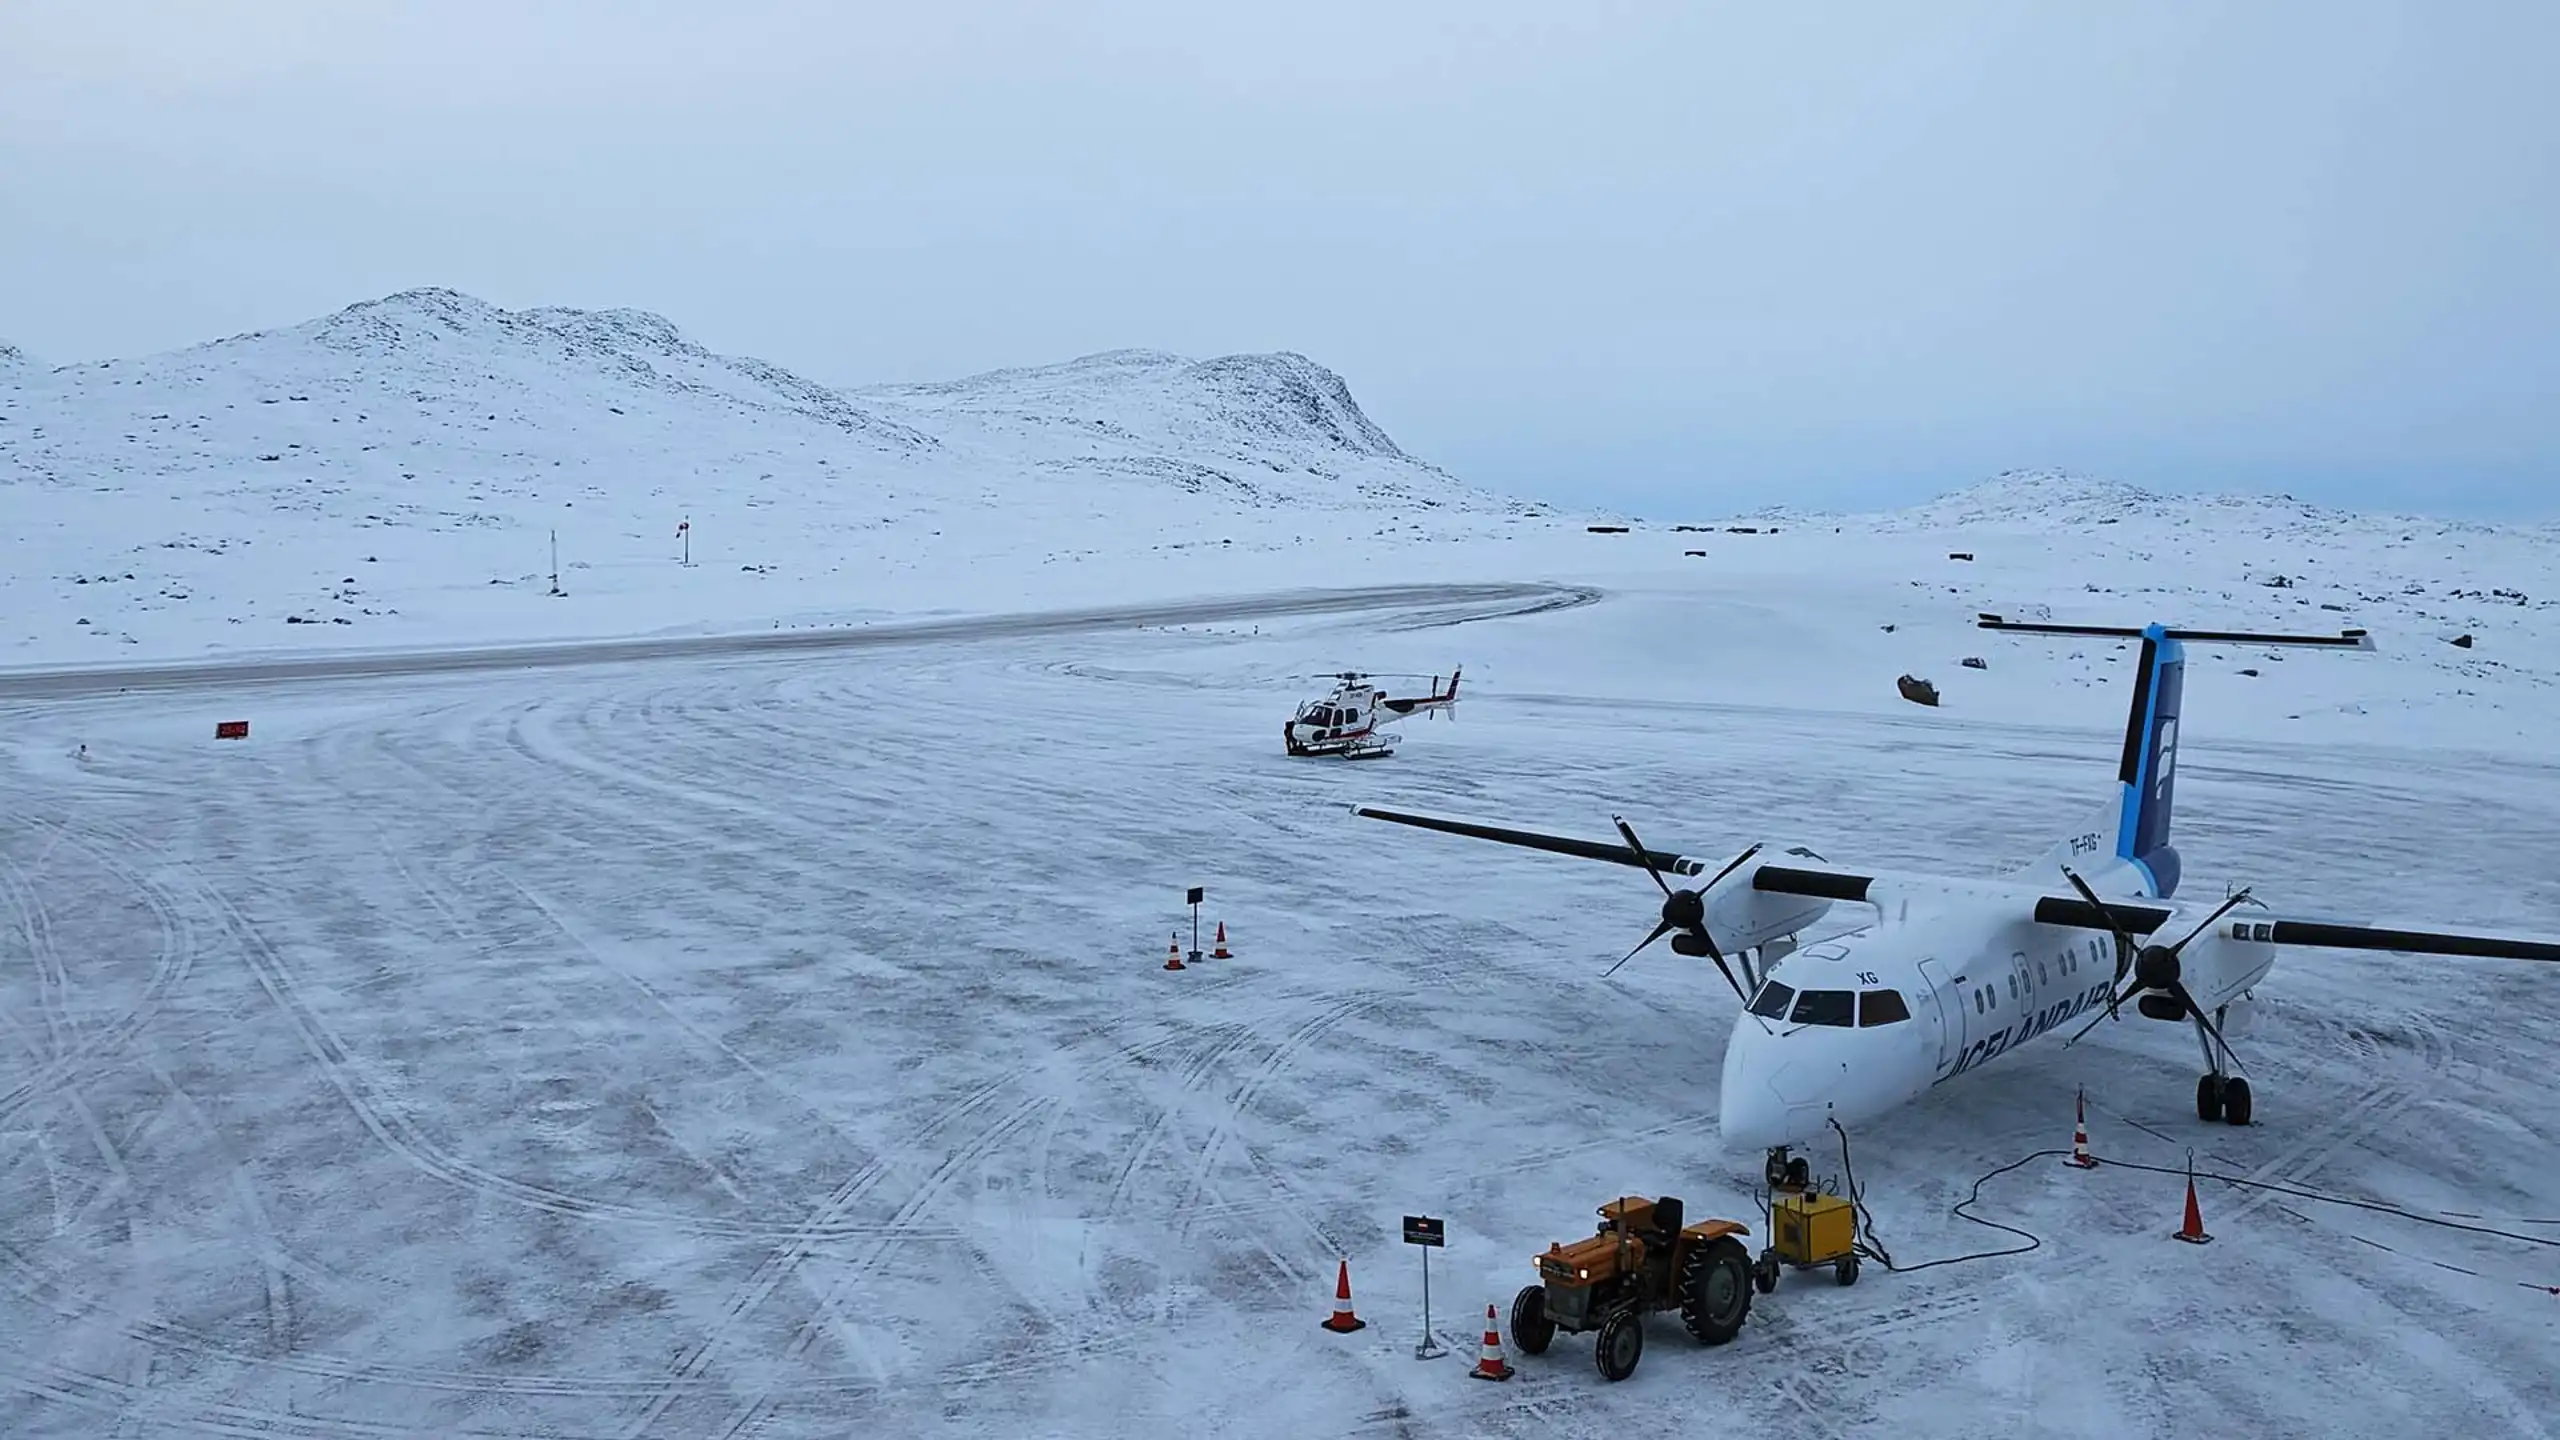 Icelandairs Dash-8 FI103 nal. 11.51 Kulusummut mippoq. Greenland Copter timmisartortartoq utaqqigaa. Ass.: Jesper Nymand, AFIS Kulusuk